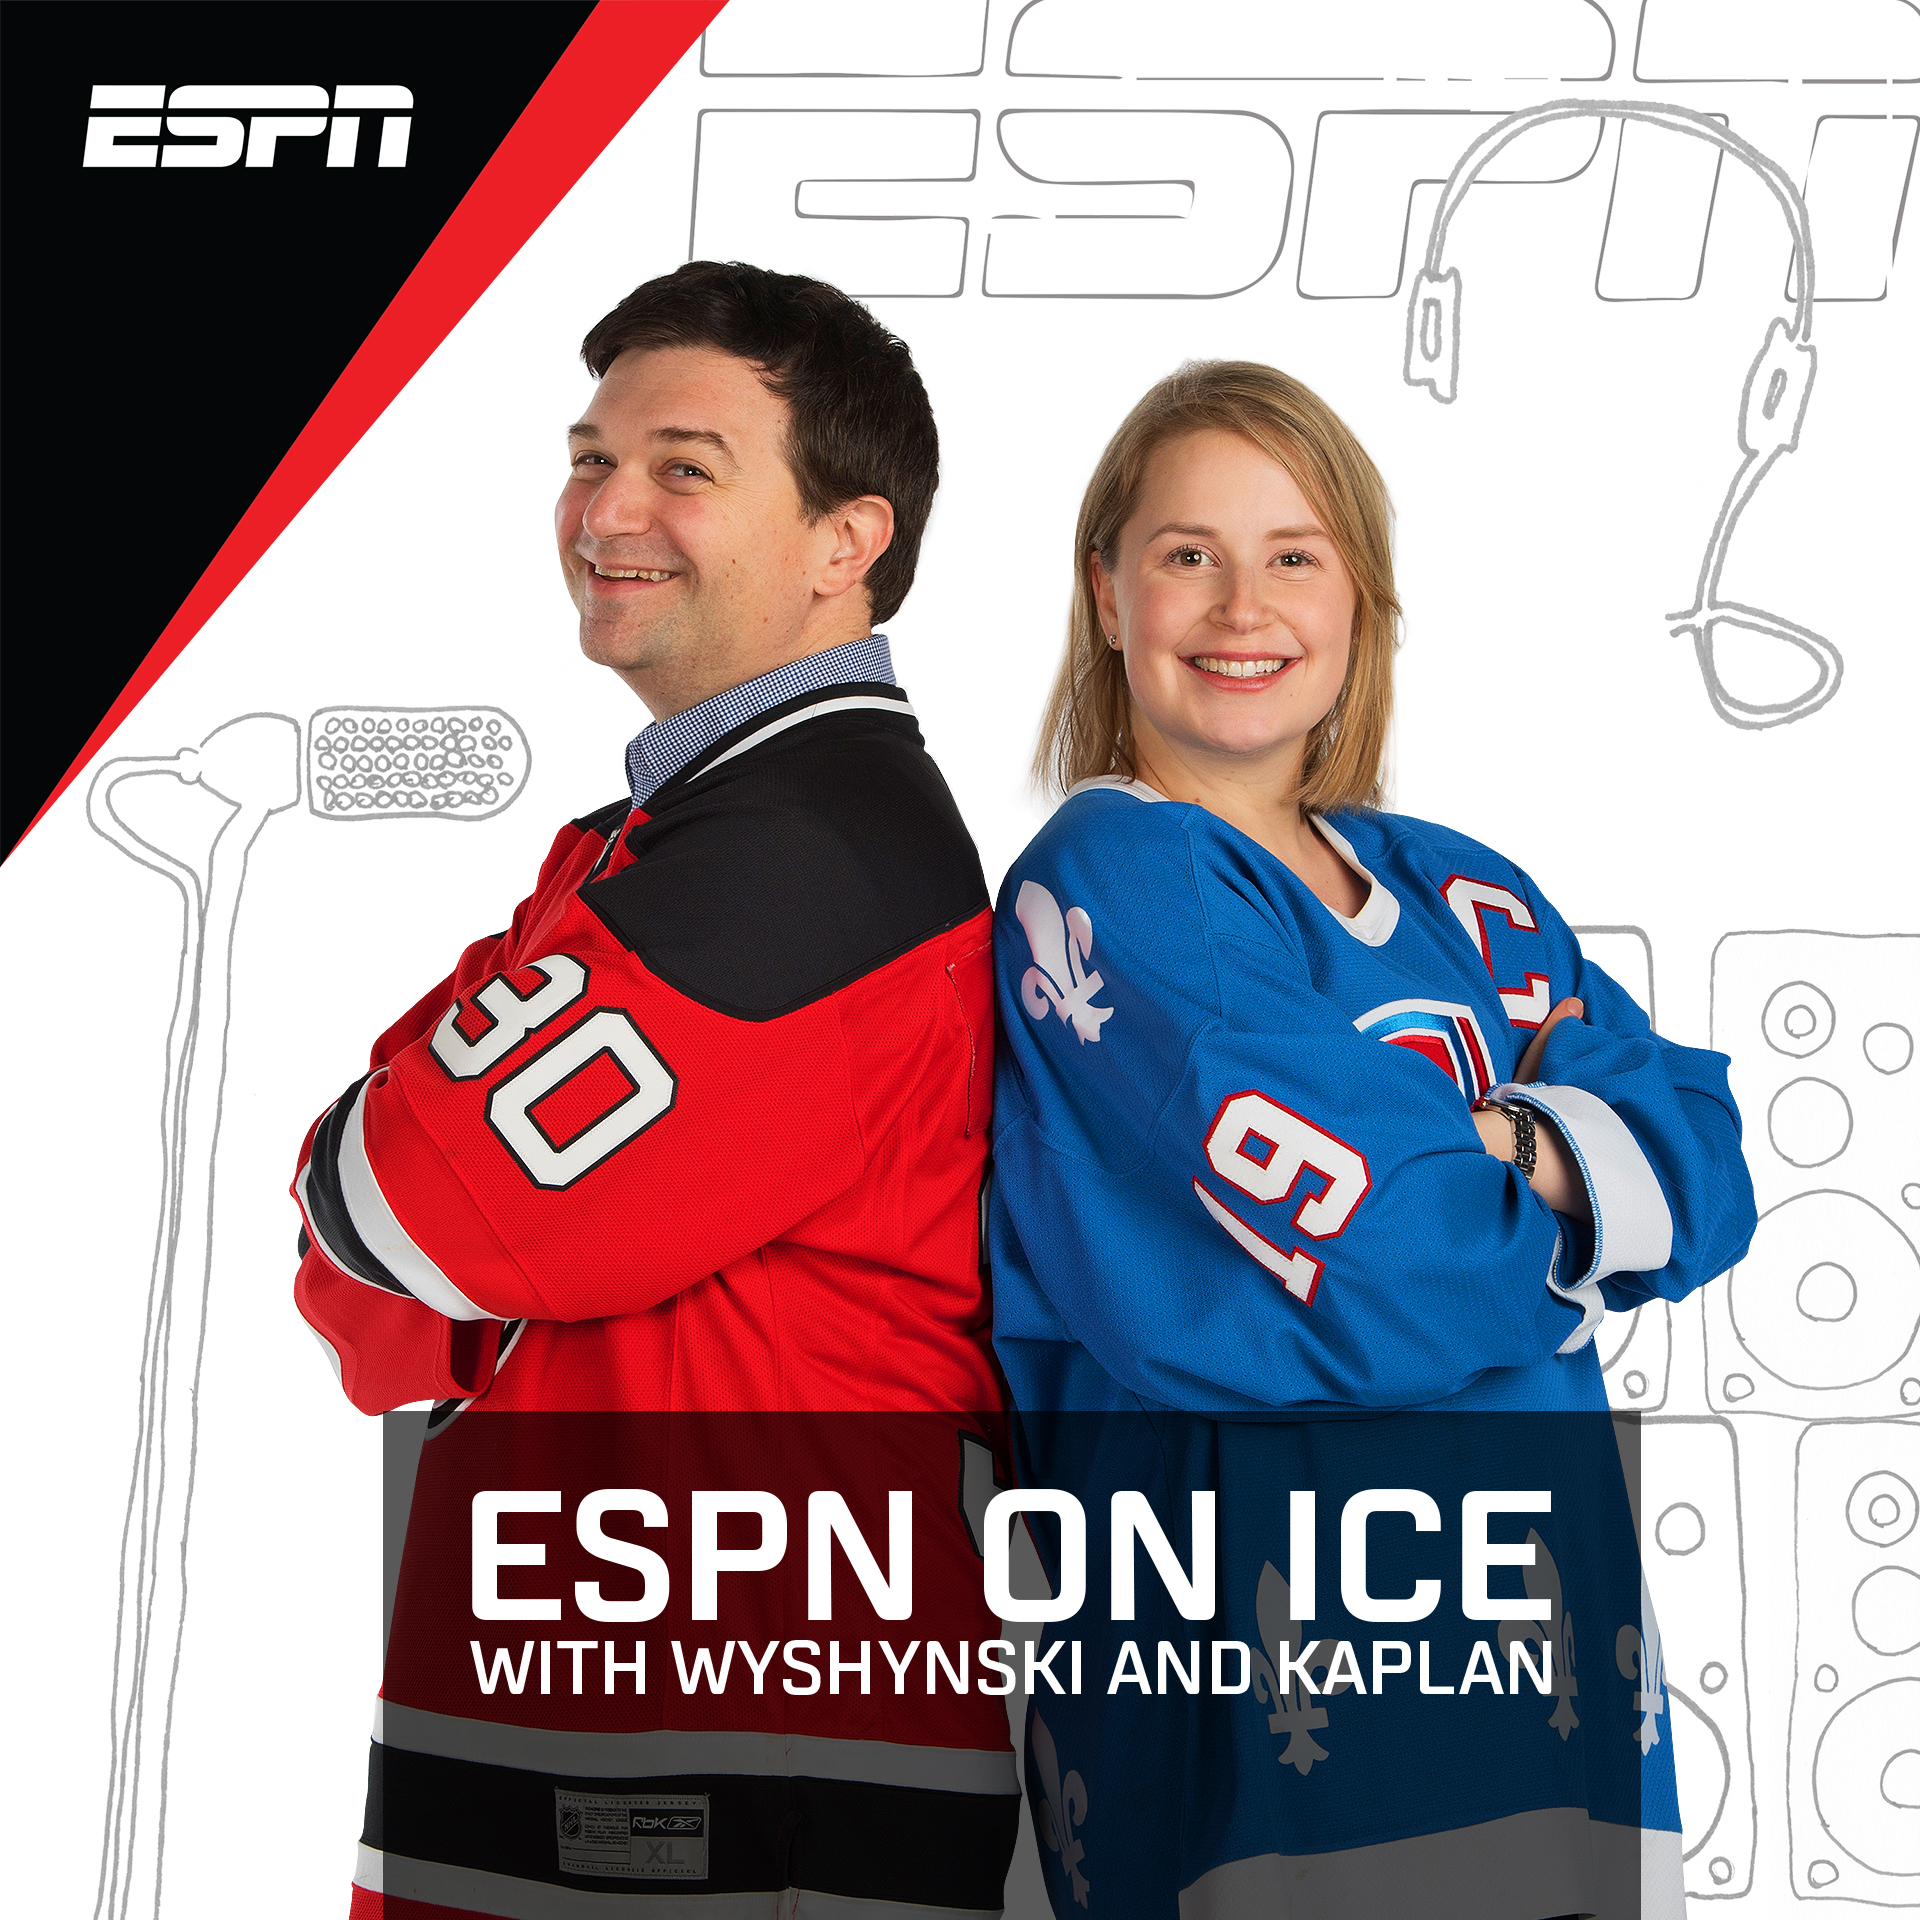 ESPN On Ice with Wyshynski and Kaplan Listen via Stitcher for Podcasts